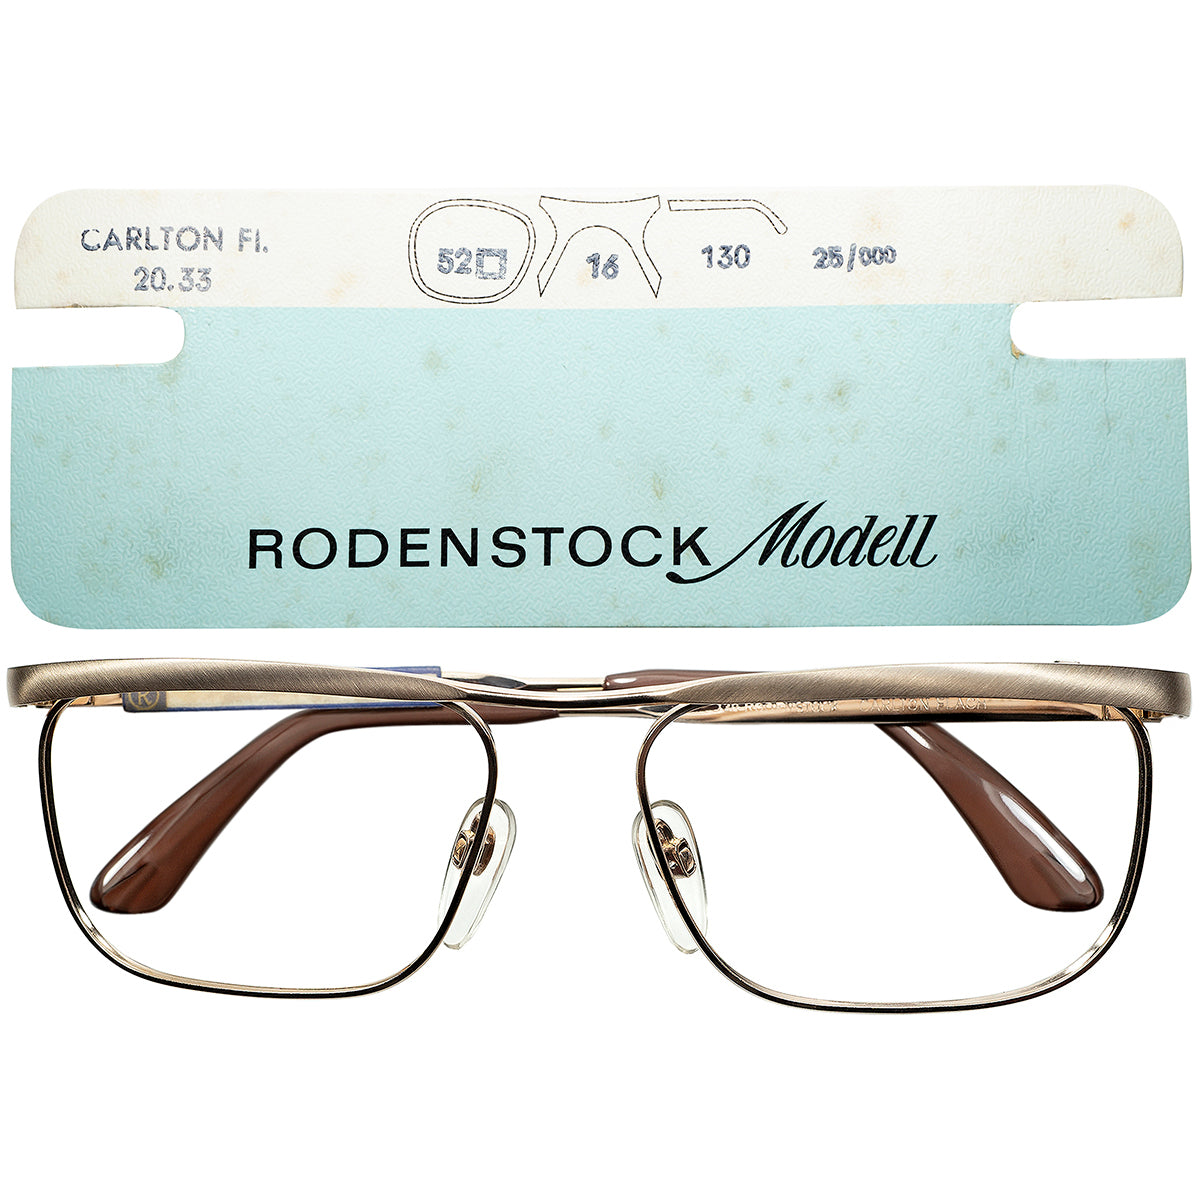 ROBERT STOCK ヴィンテージ サングラス 眼鏡 フレーム カールトン型-